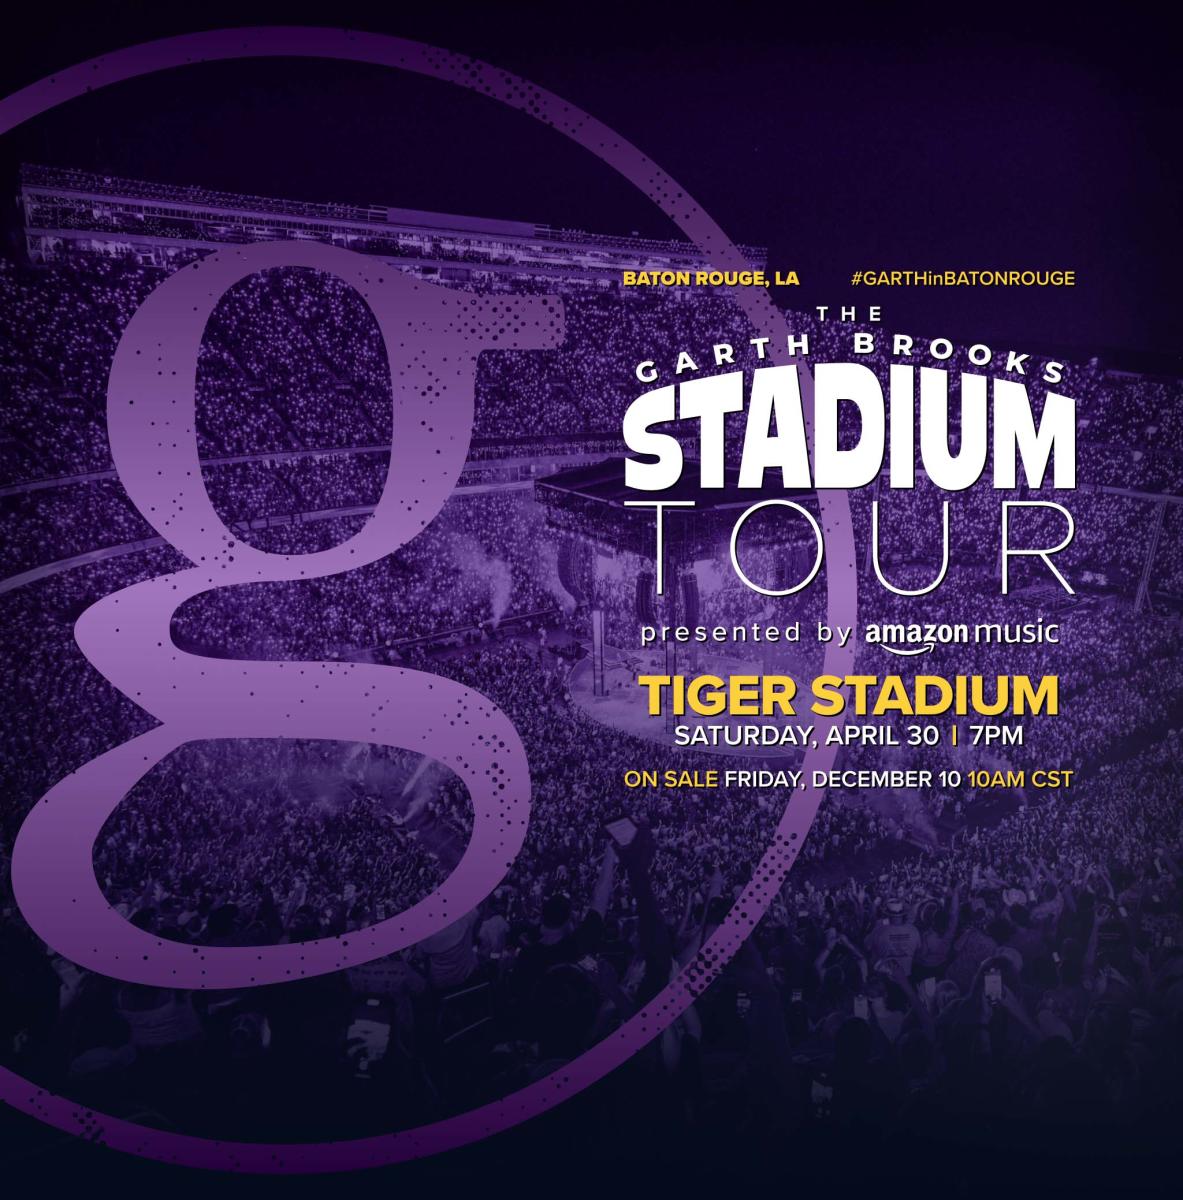 Garth Brooks Callin' Baton Rouge for Tiger Stadium Concert